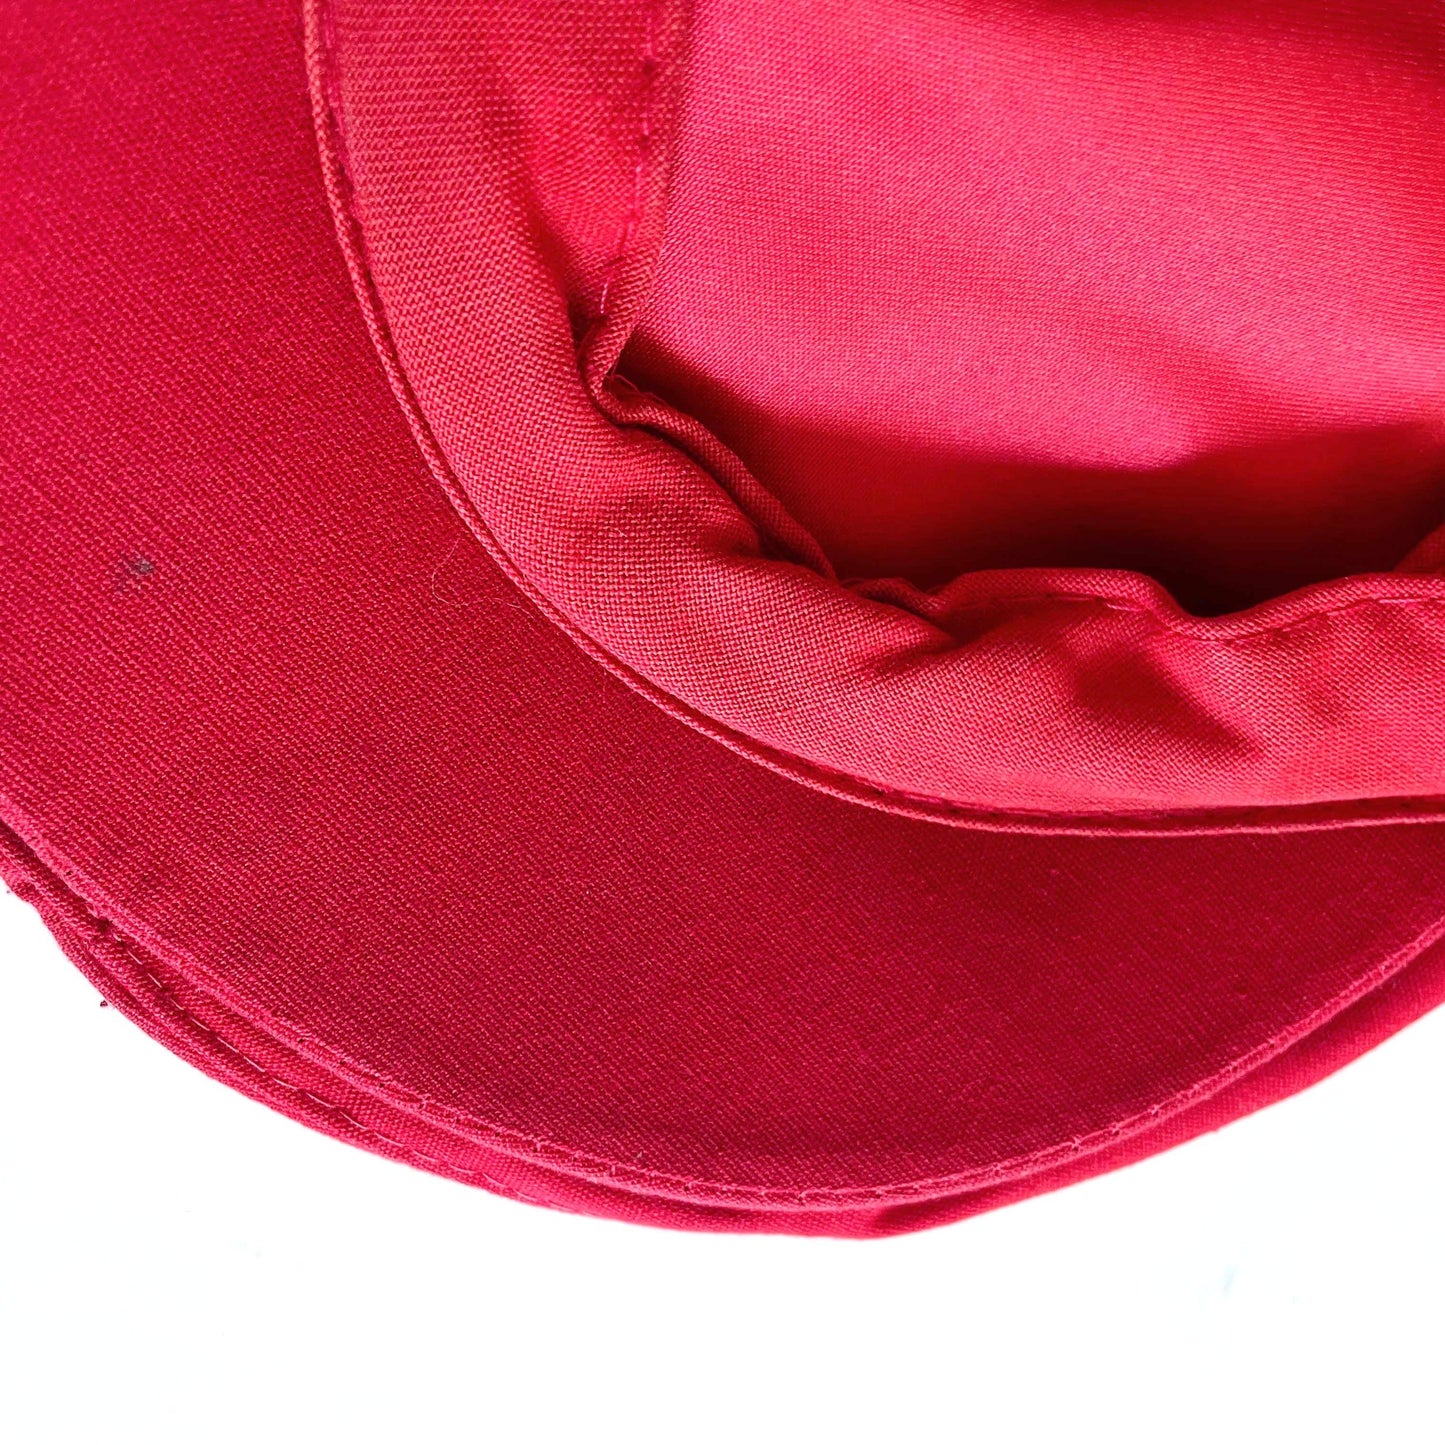 vintage stark's red flat cap - OS